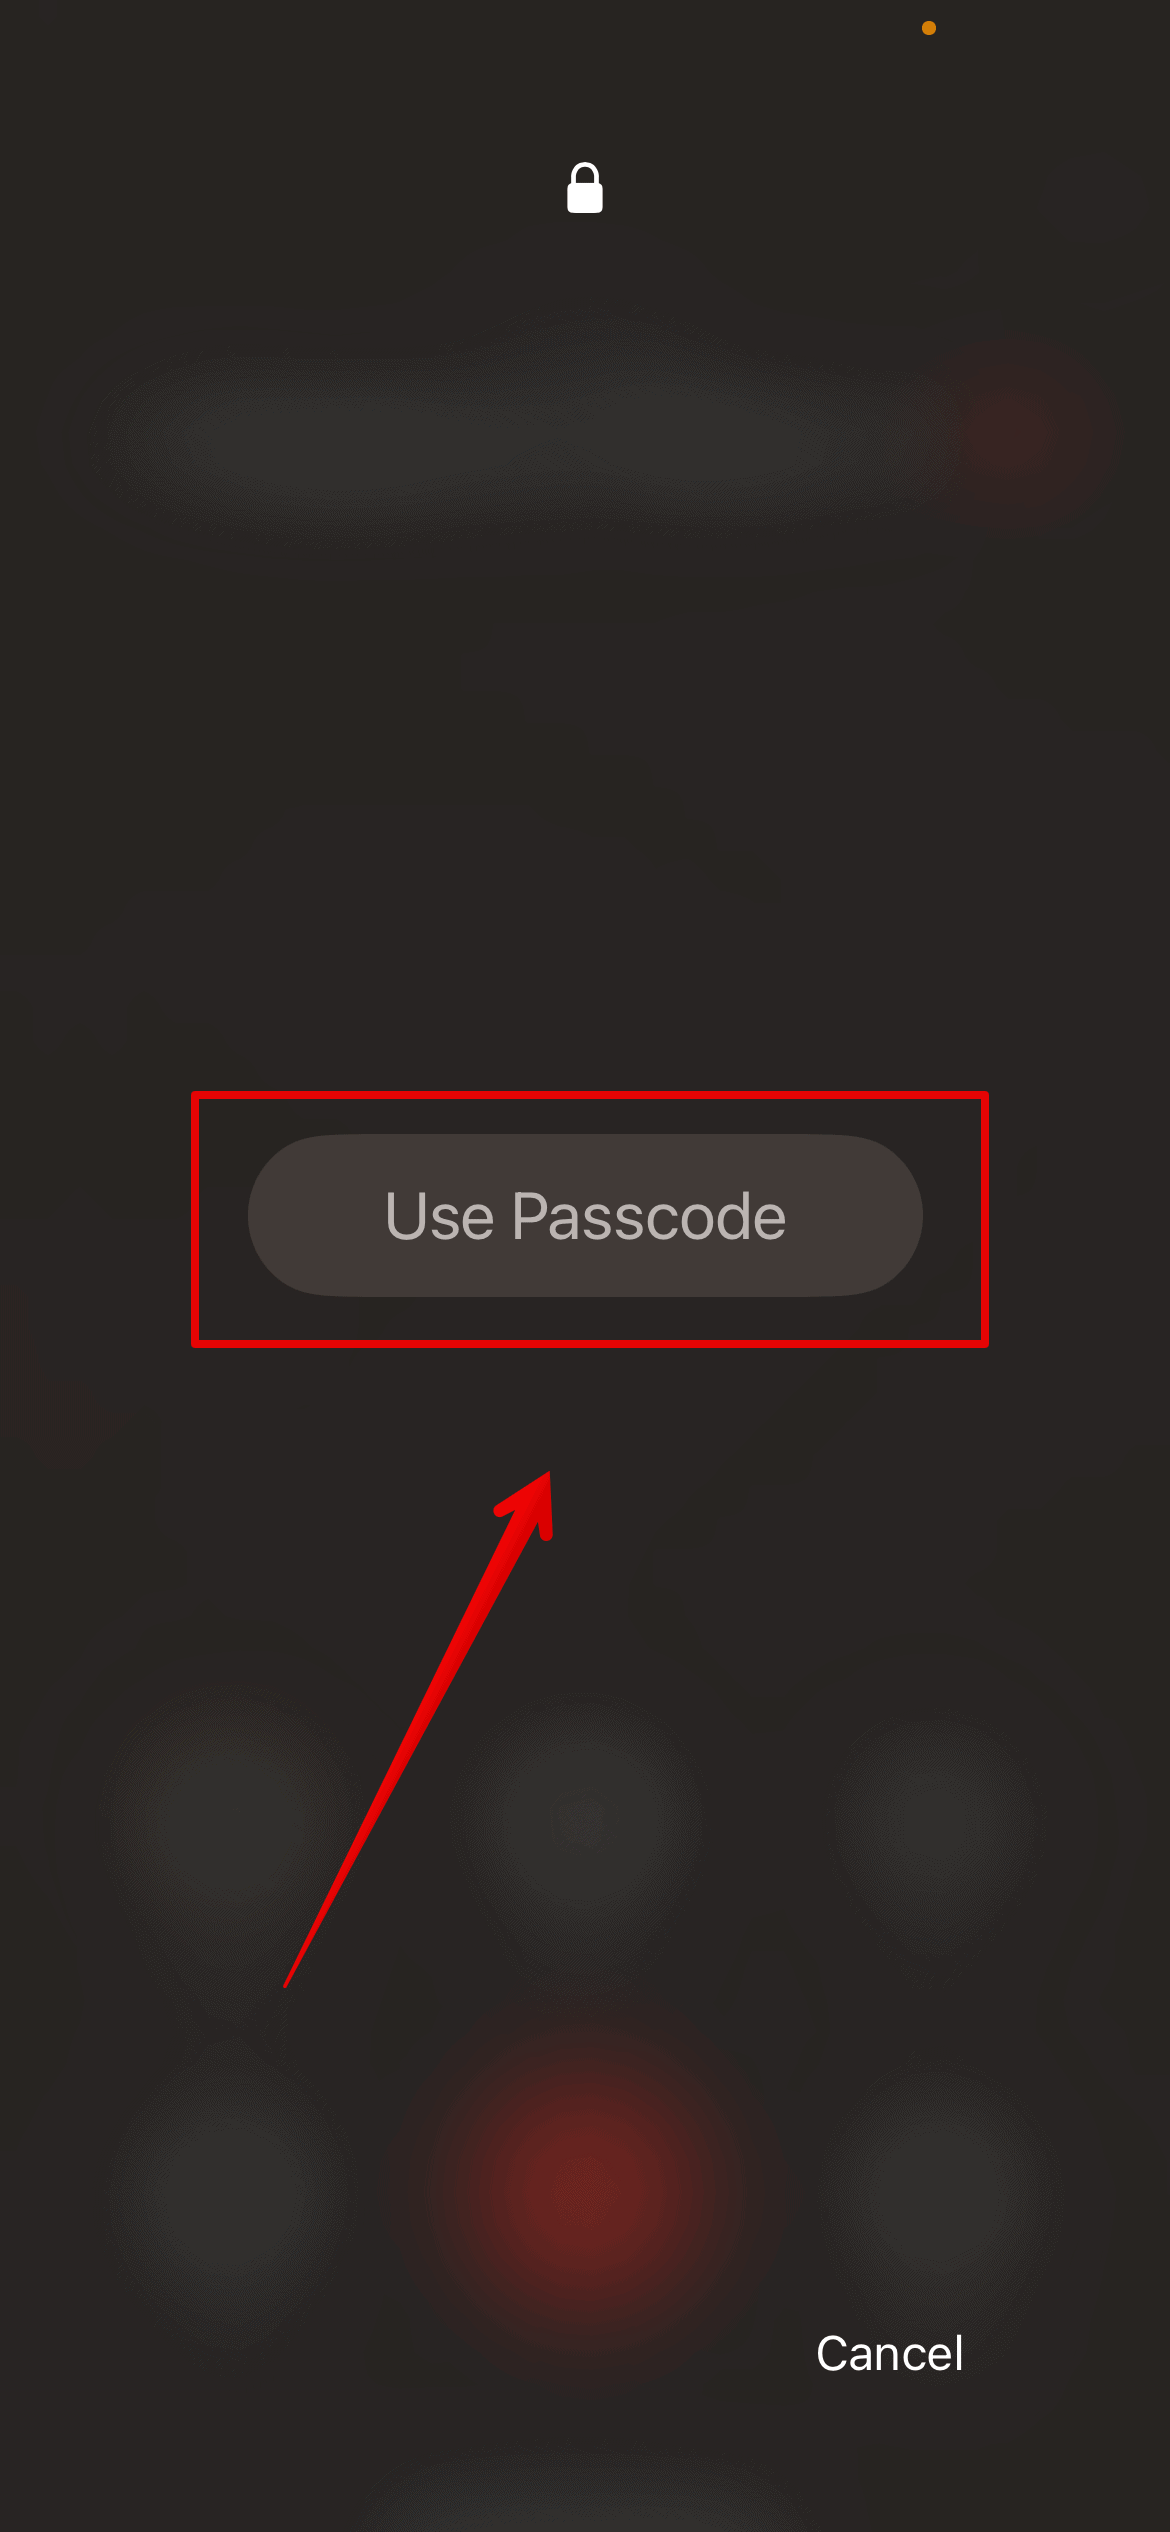 Enter iPhone passcode